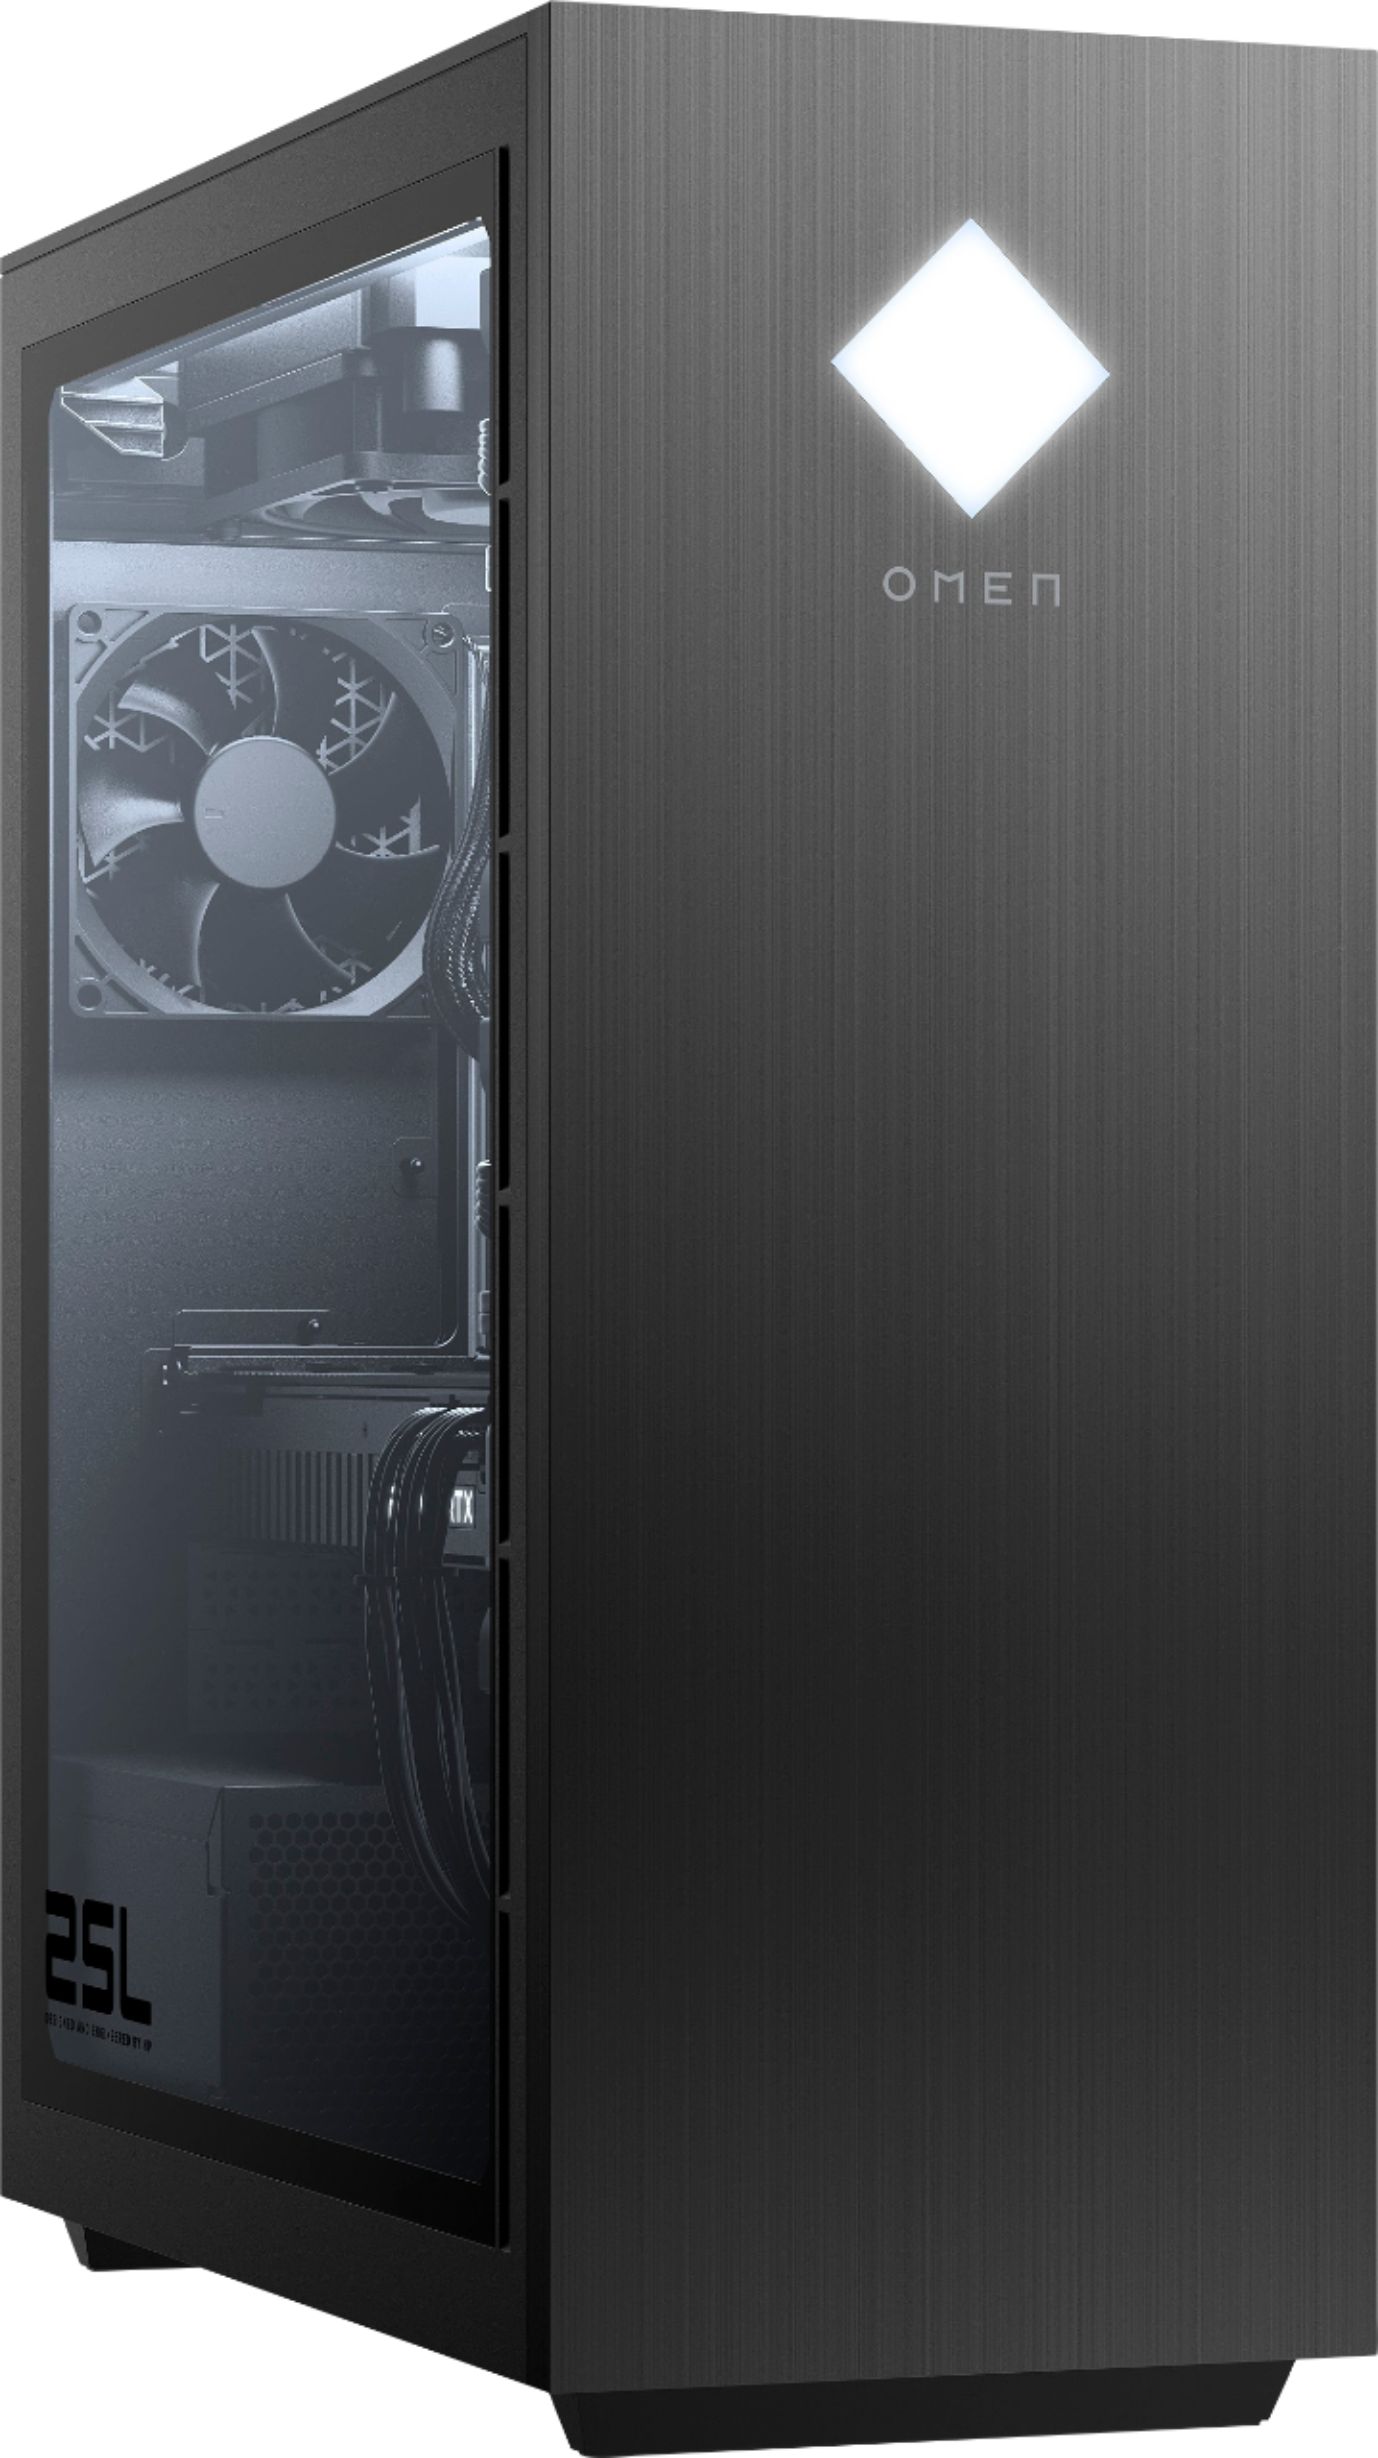 Review: HP's Omen 45L Desktop Is A Refreshing Desktop From A Major OEM